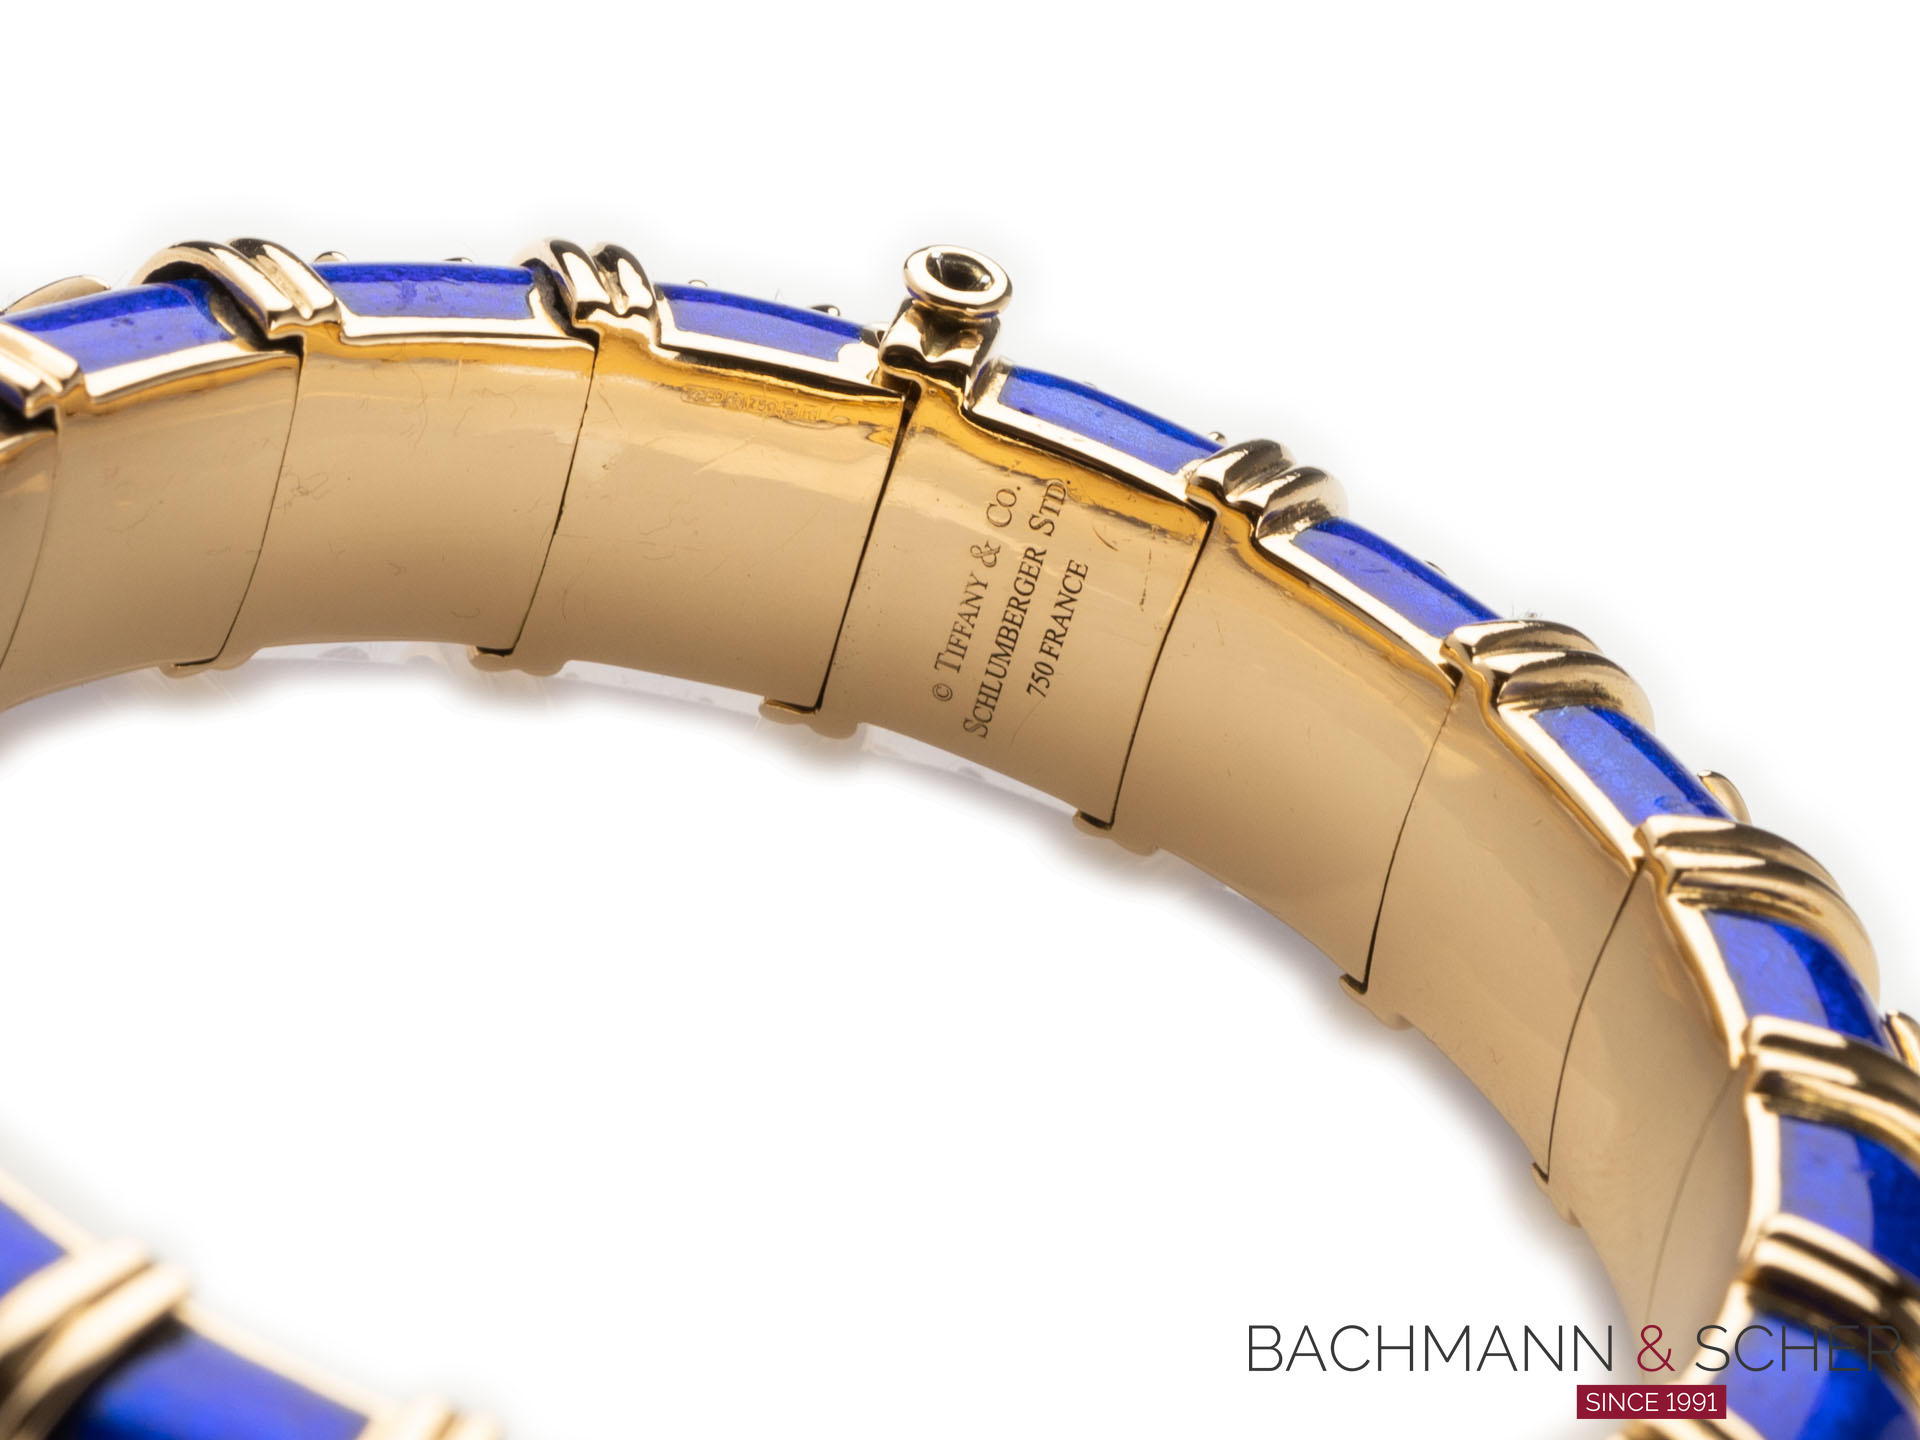 Sold at Auction: Tiffany & Co., Schlumberger Gold and Blue Paillonné Enamel  'Croisillon' Bangle Bracelet, France